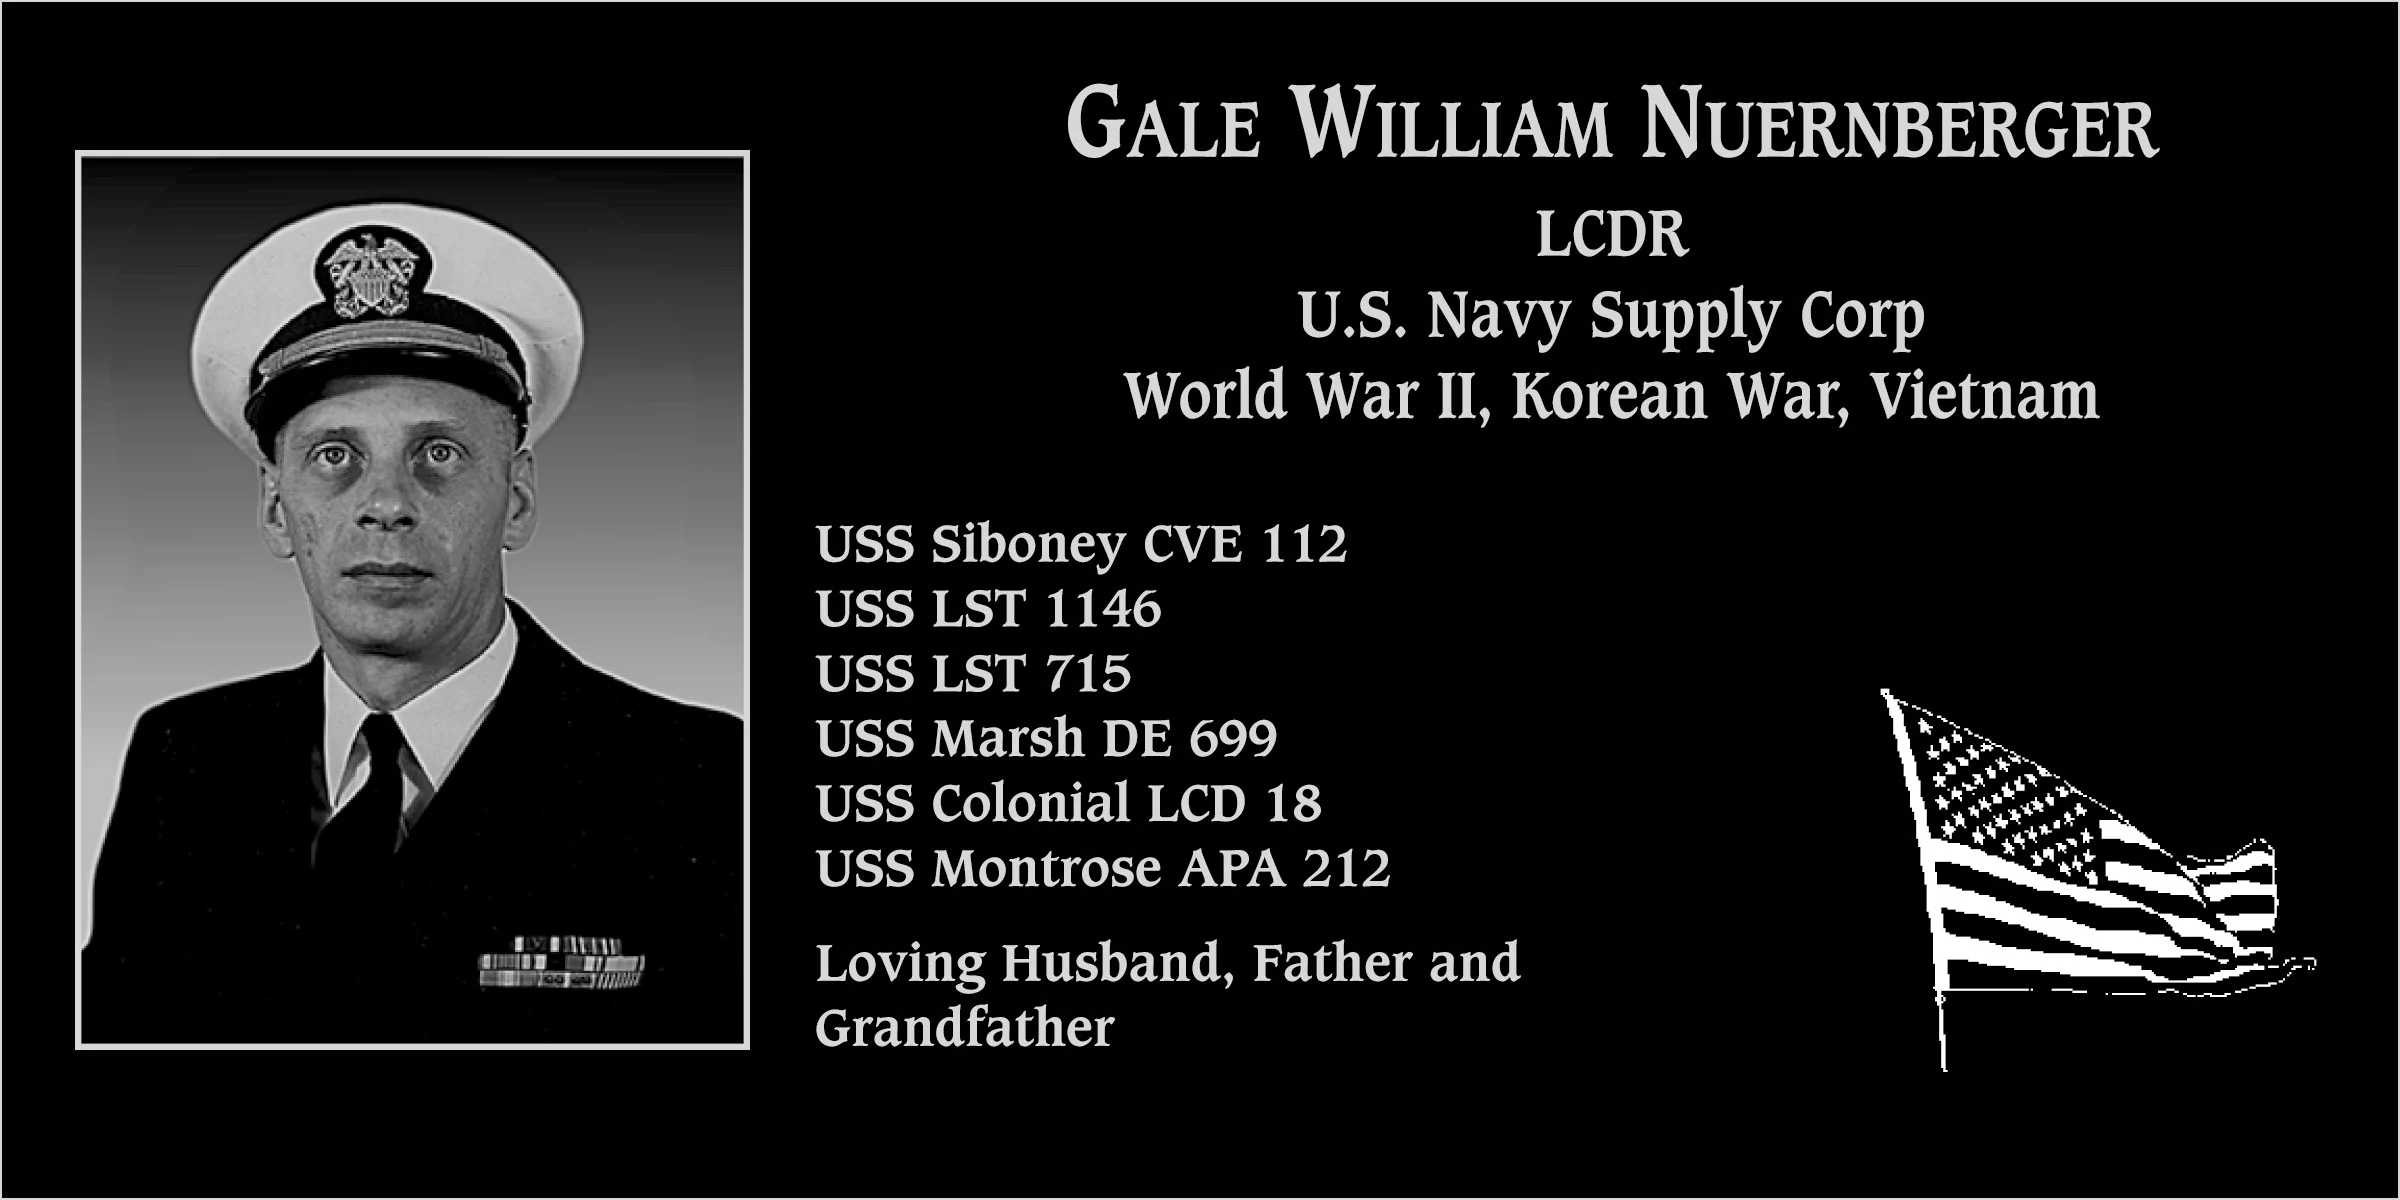 Gale William Nuernberger